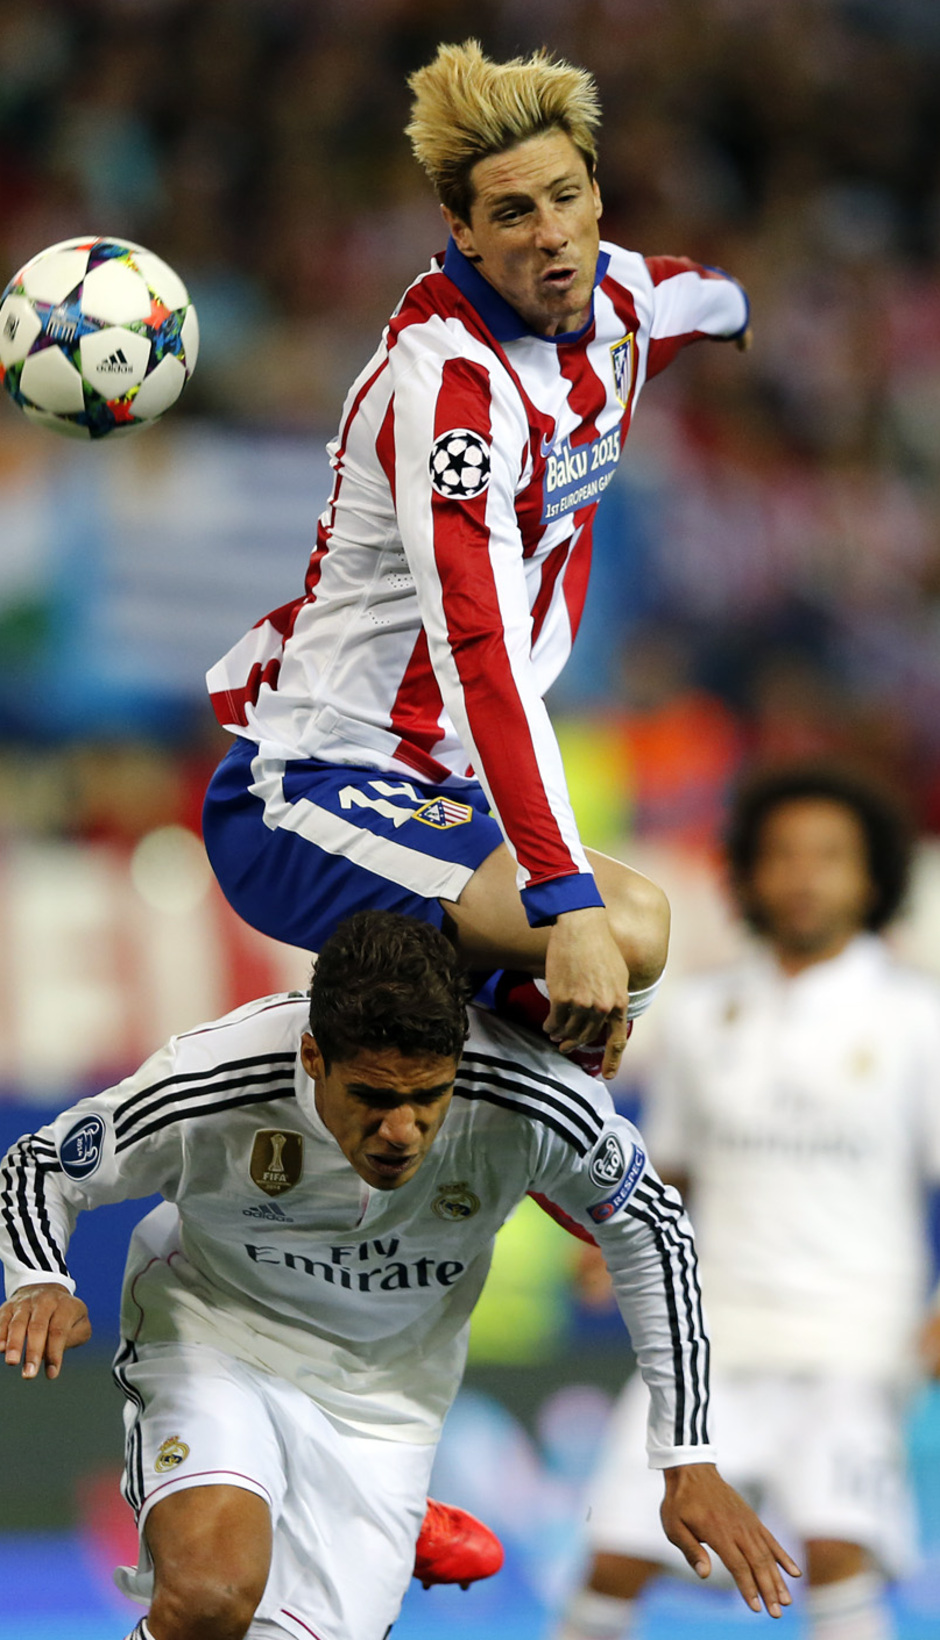 temporada 14/15. Partido Atlético de Madrid Real Madrid. Champions League. Torres rematando de cabeza